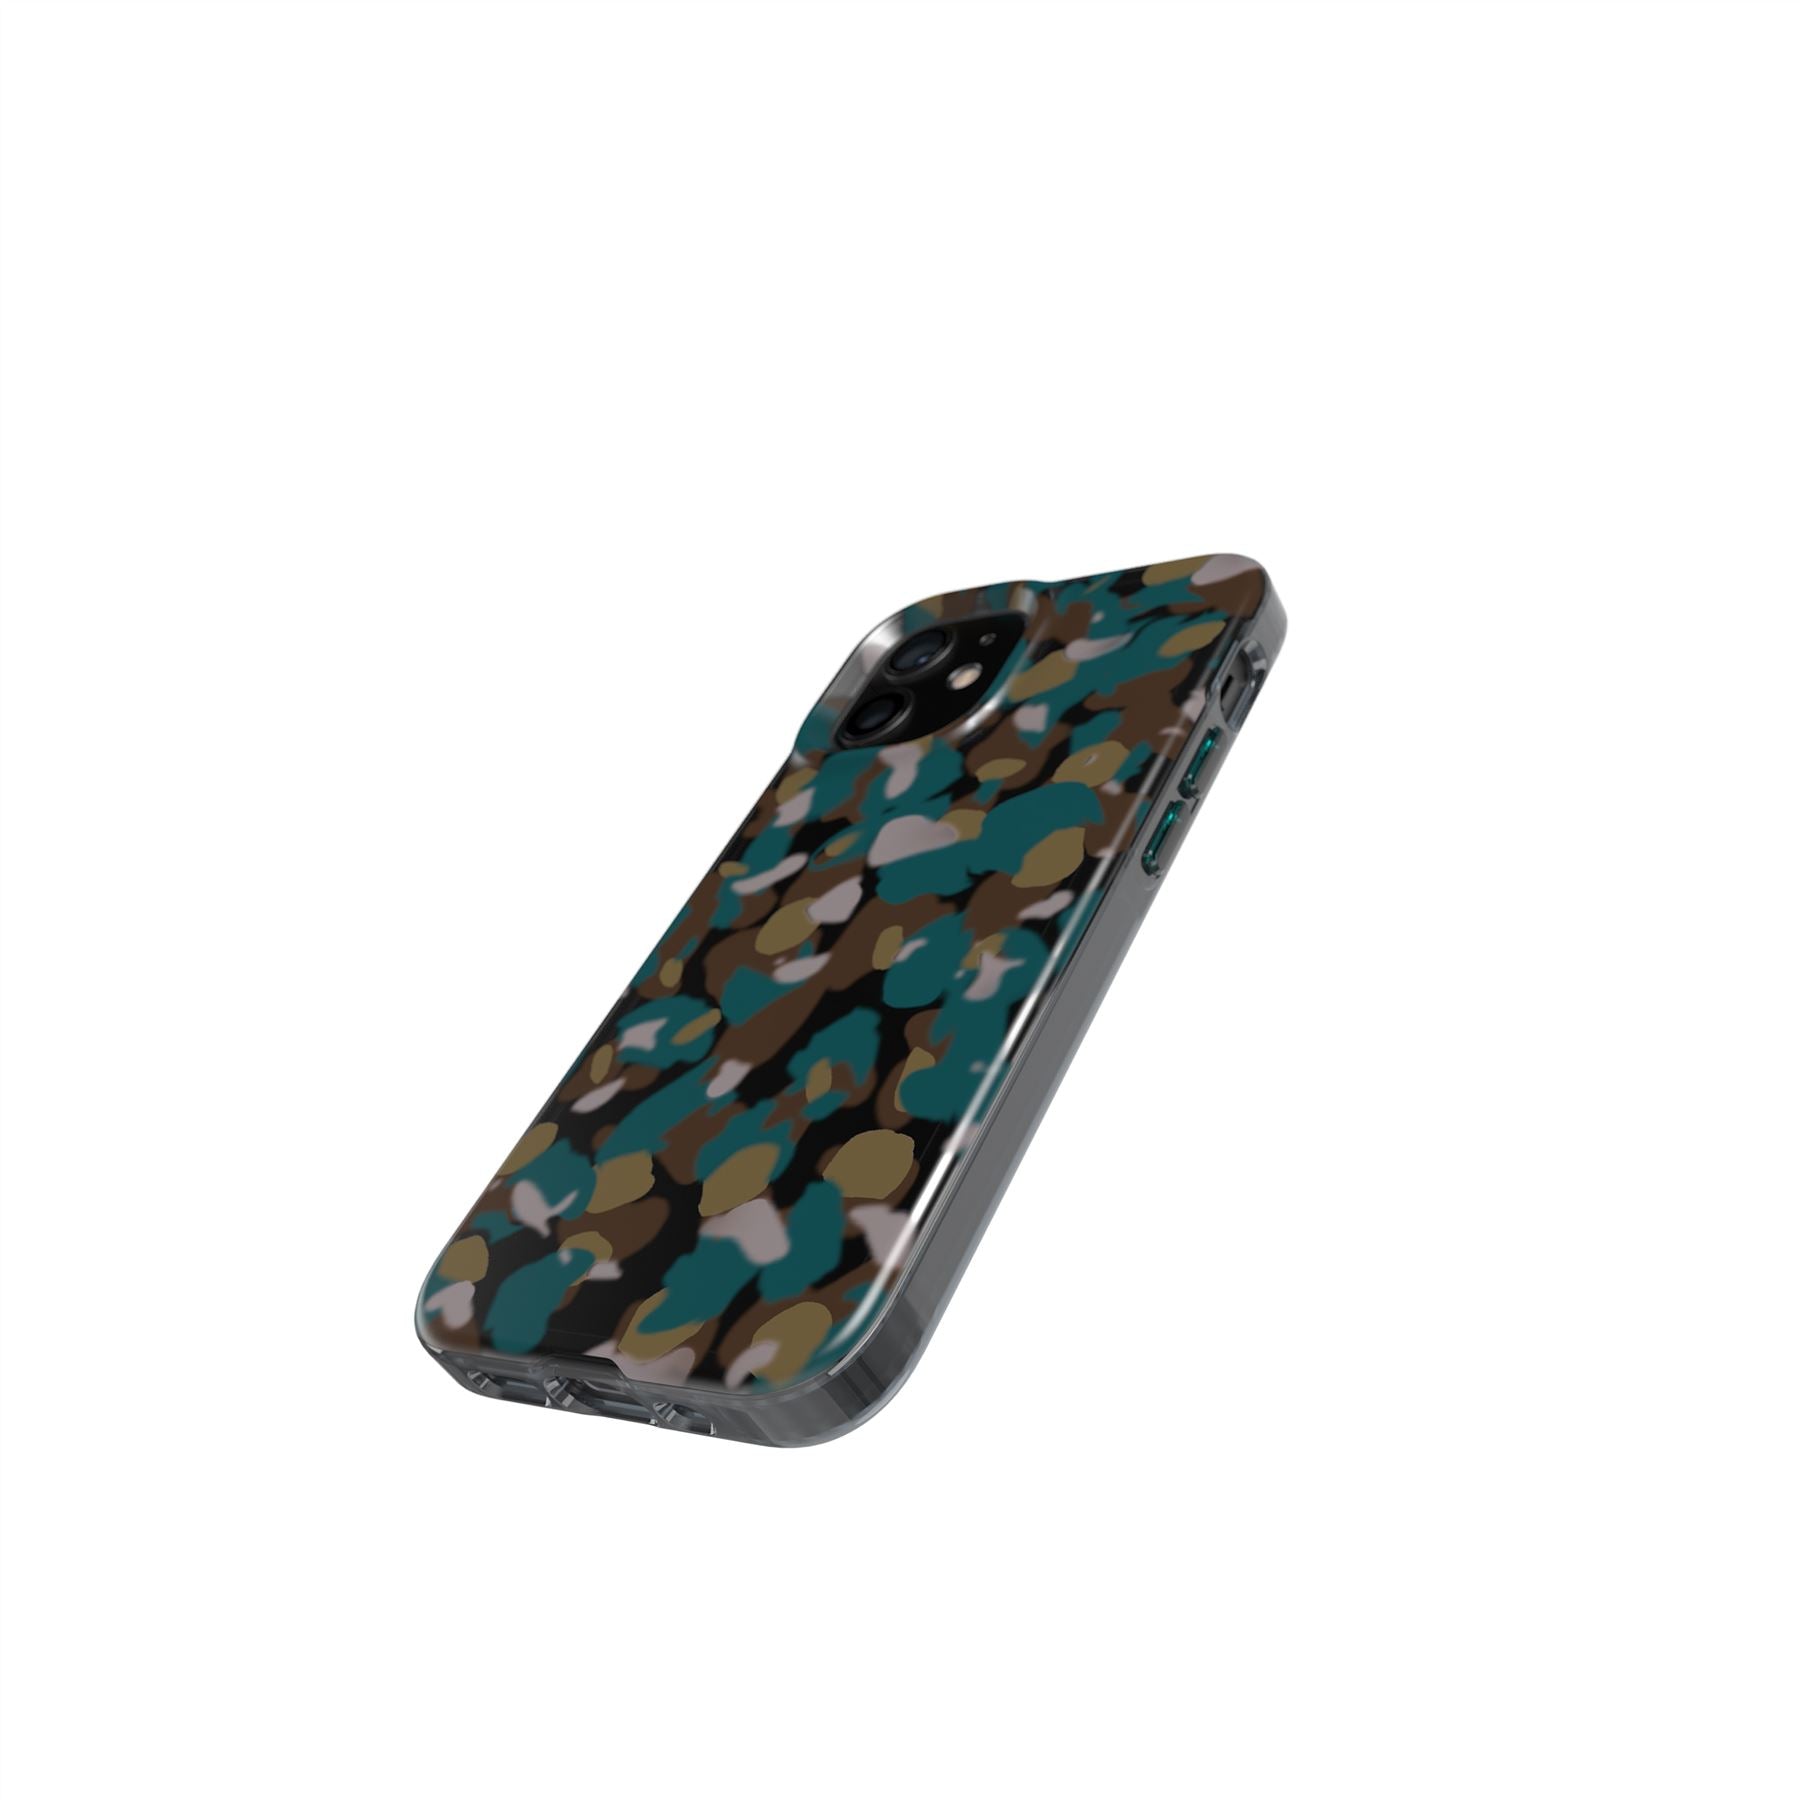 Evo Art  - Apple iPhone 12 mini Case - Pine Green